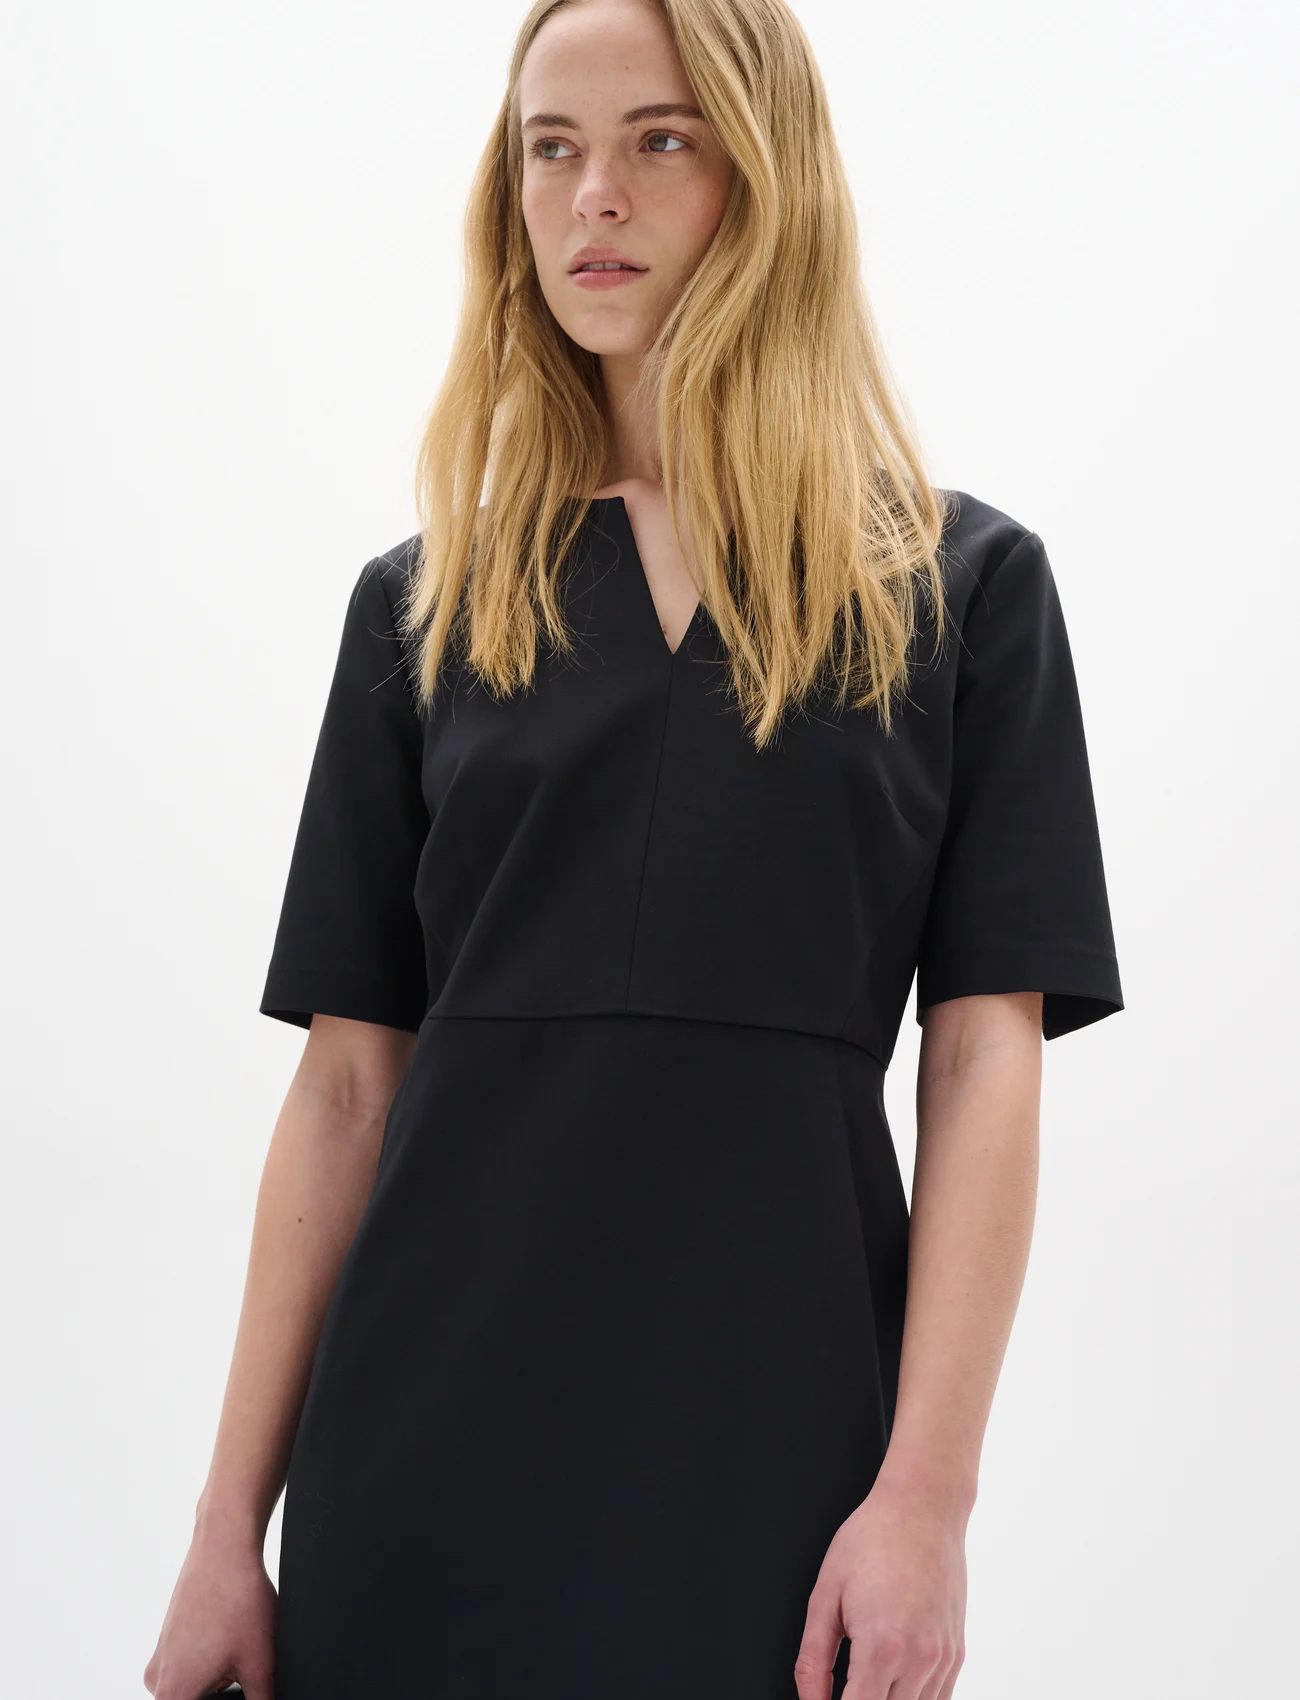 InWear - Zella Dress - cocktail-kjoler - black - 0